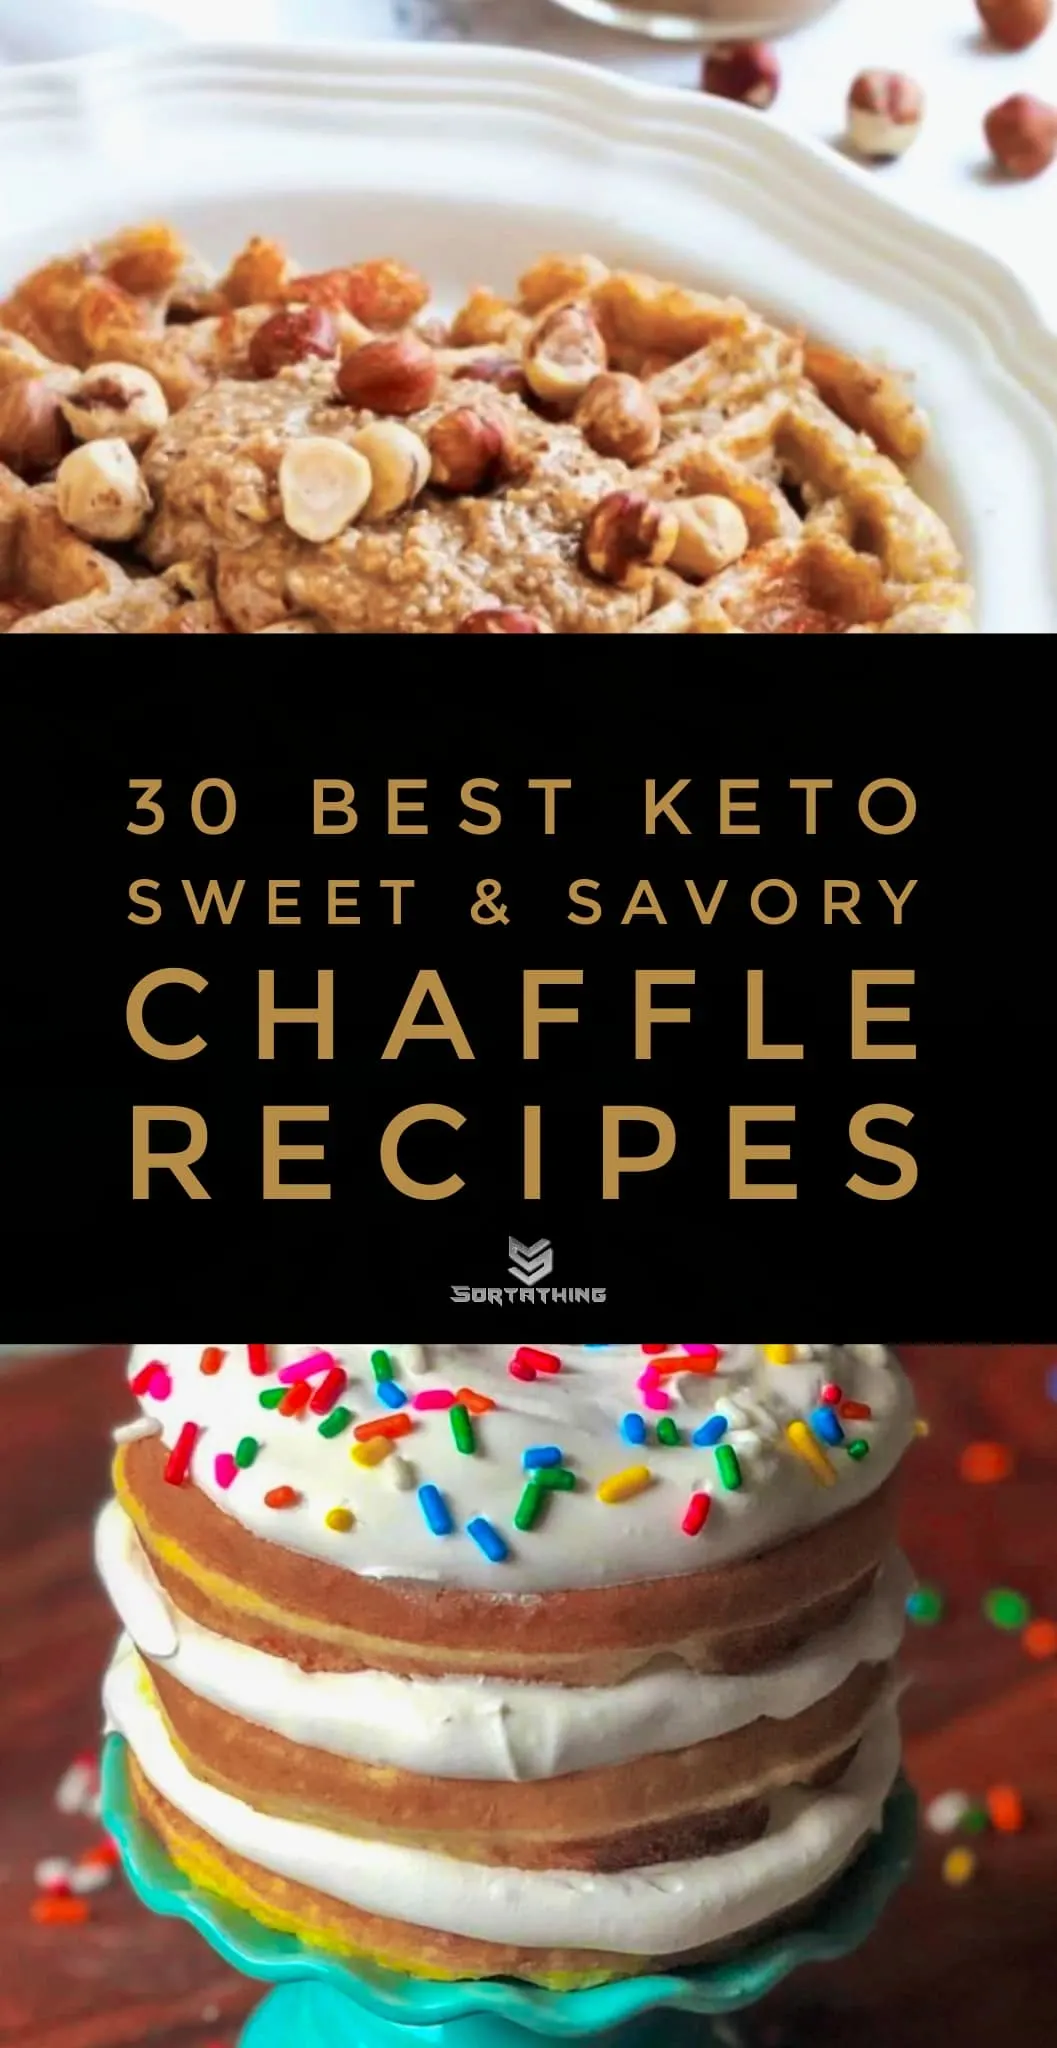 Peanut Butter Chaffle Recipe and Keto Birthday Cake Chaffle Recipe